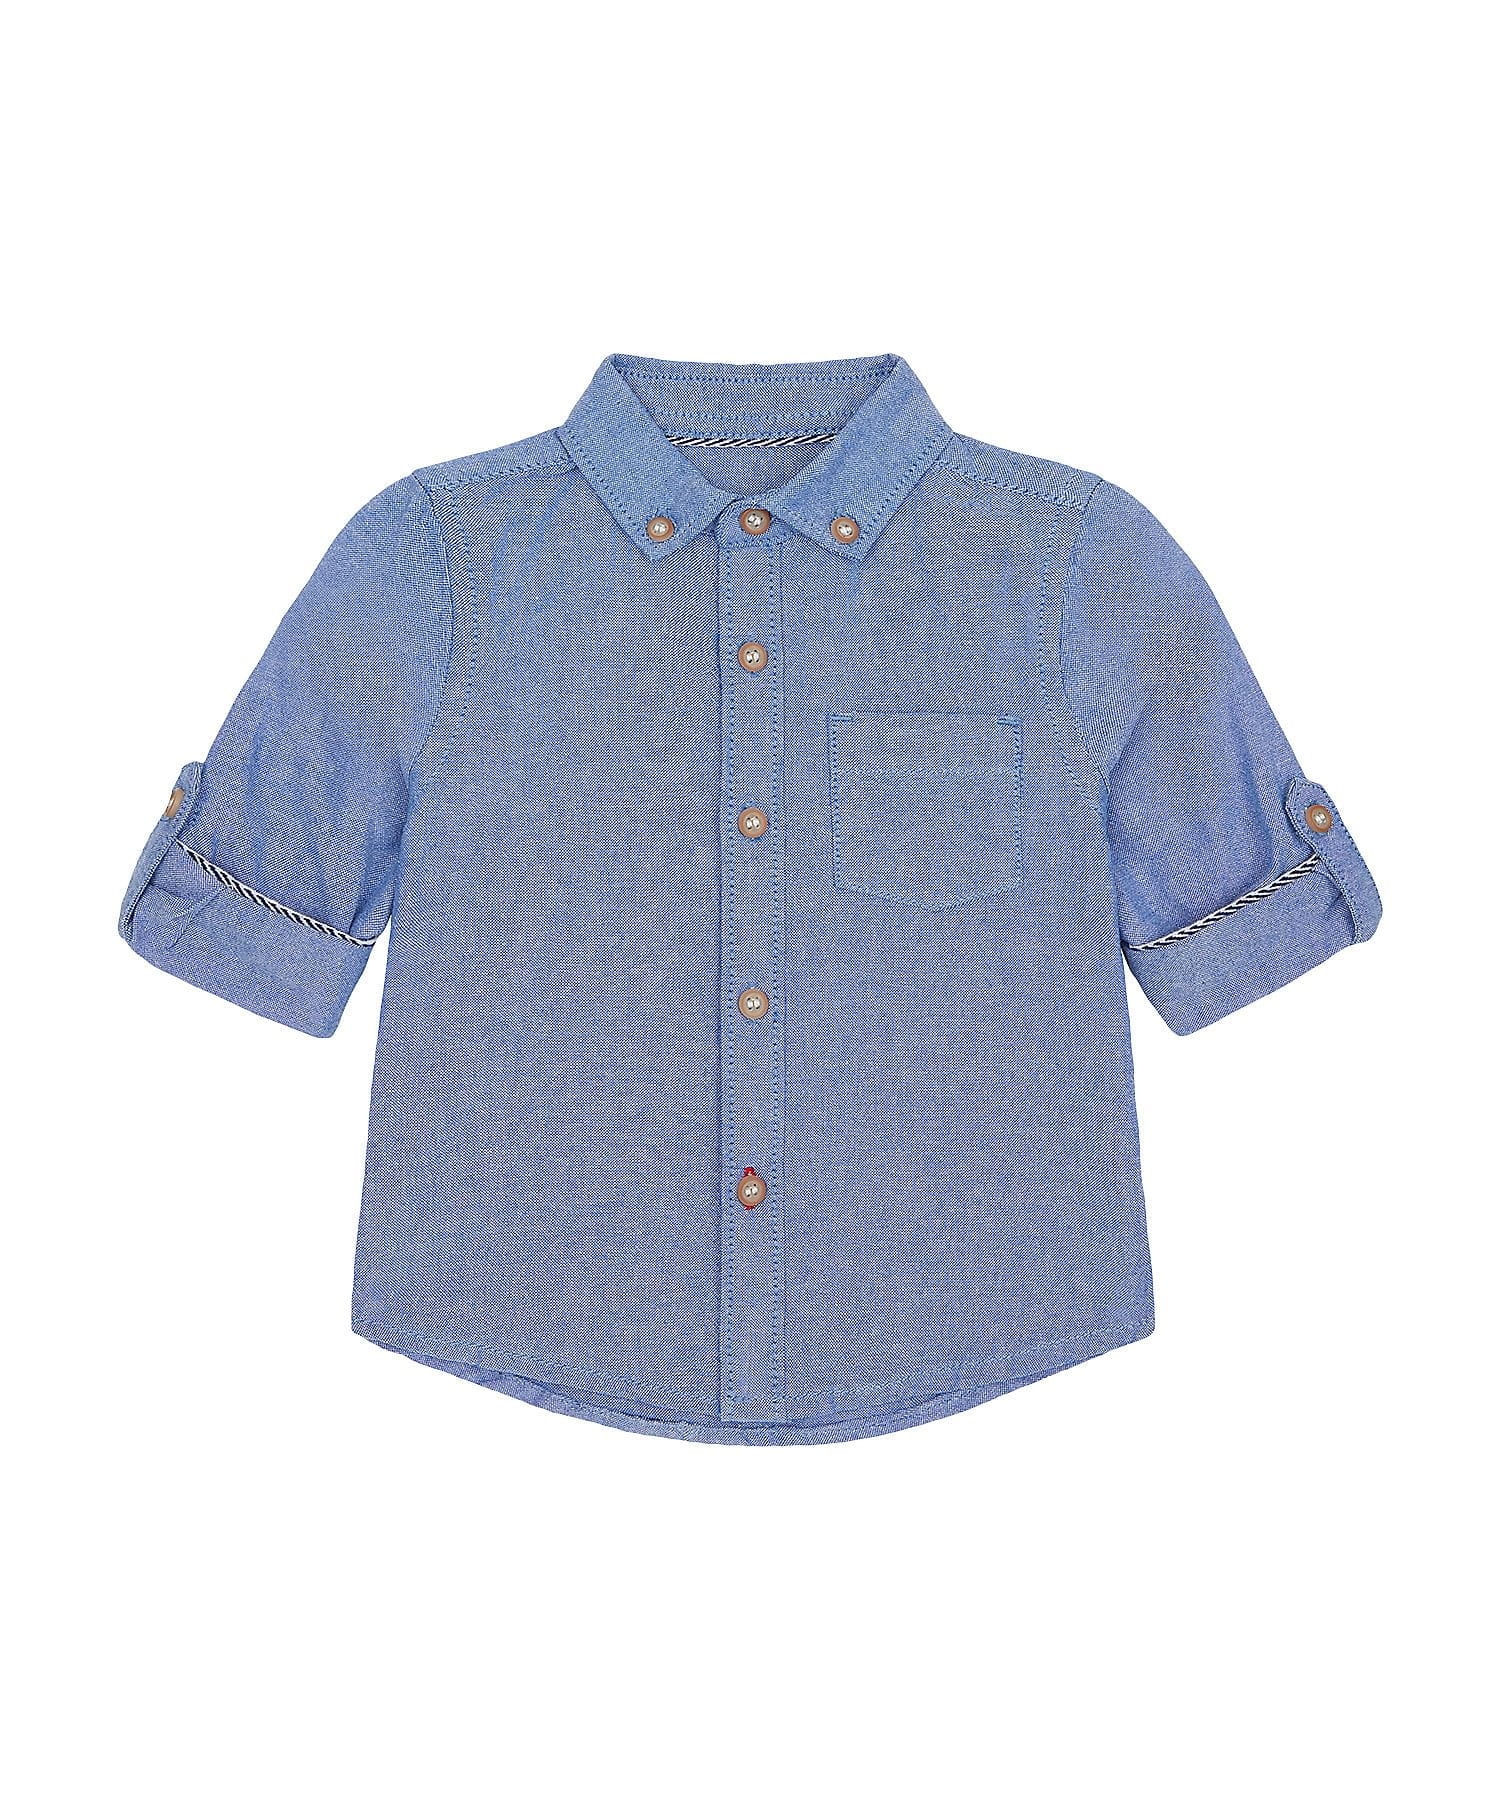 Mothercare | Boys Full Sleeves Oxford Shirt - Blue 0